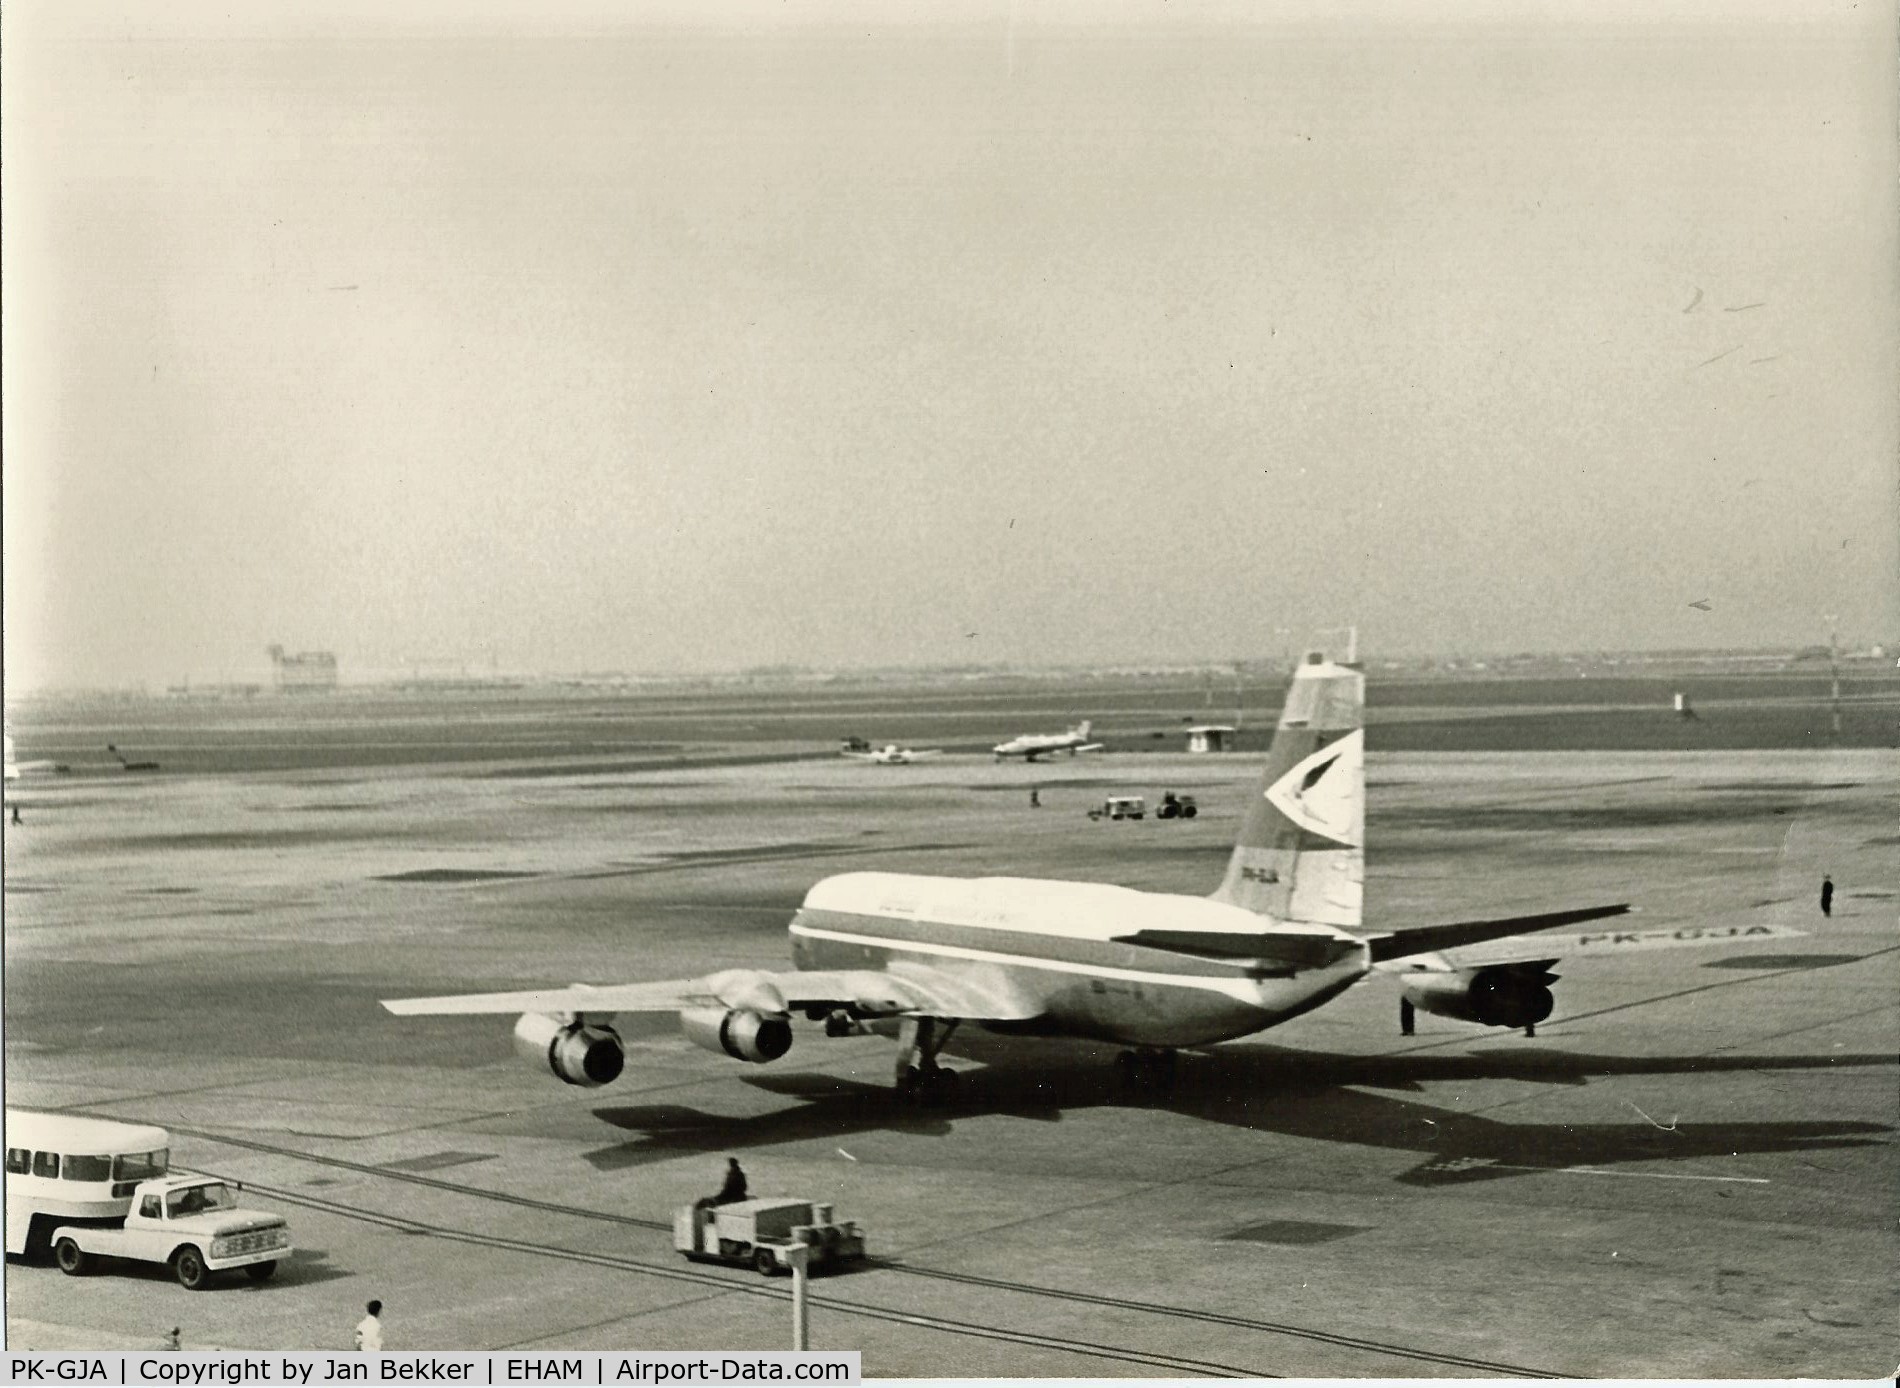 PK-GJA, 1961 Convair CV-990-30A-5 Coronado C/N 30-10-3, Leaving Schiphol's apron in 1965 on its way to Djakarta.